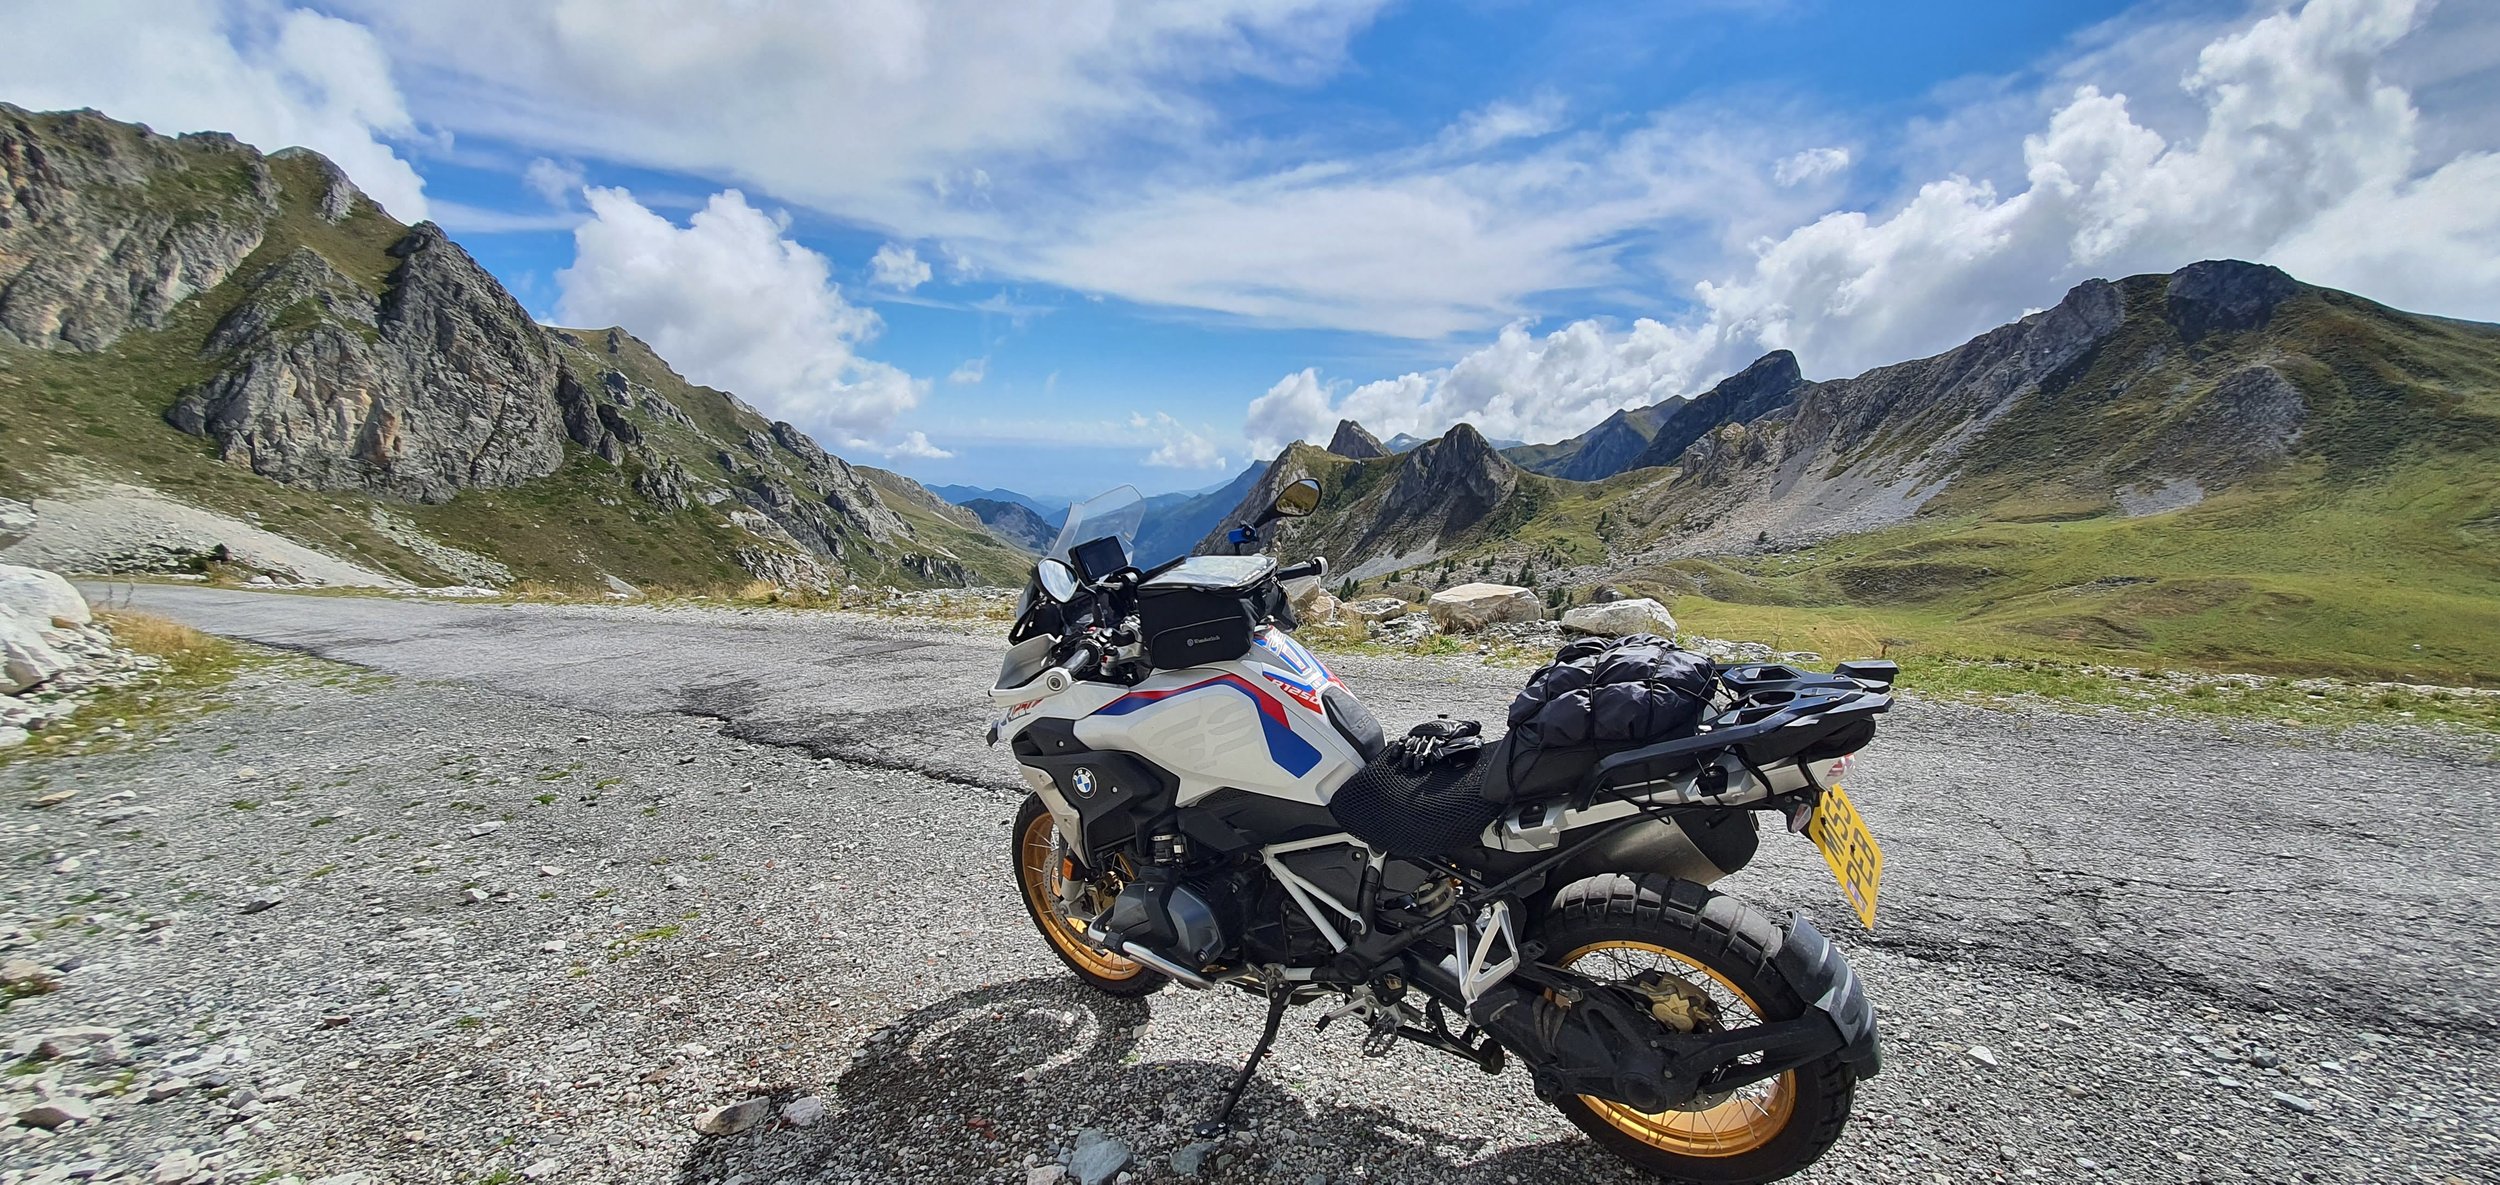 Ali-Peberdy-Solo-Europe-Adventure-Rider-Radio-Motorcycle-Podcast-15.jpg